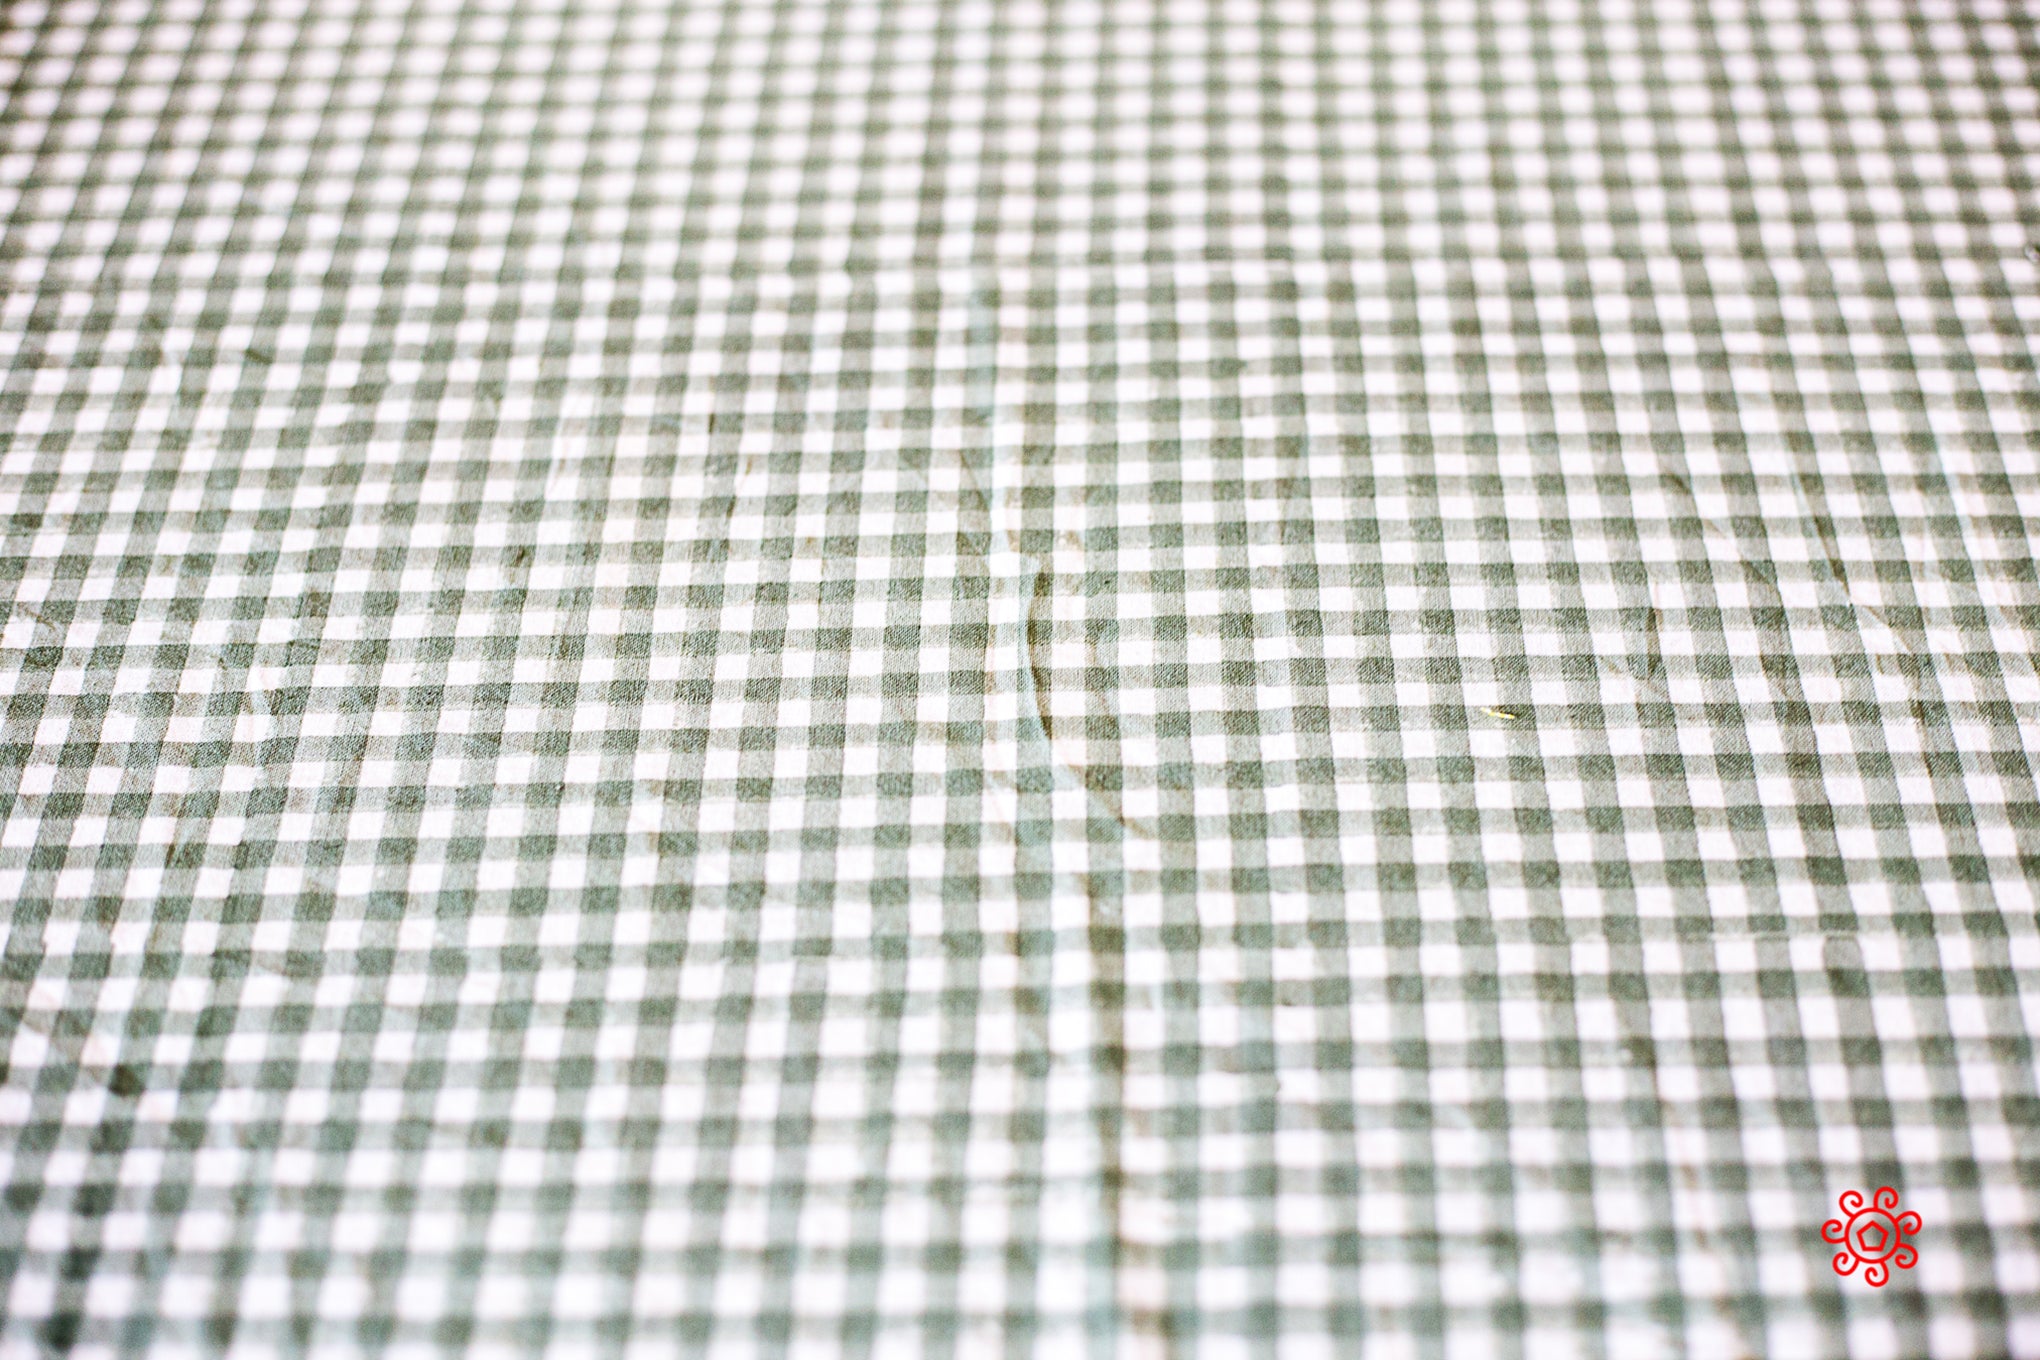 Roysha 2021 Bed Sheet/Flat Sheet/ Bed Linen Queen Size 100% Handmade, Hand Block Printed, Pure Cotton, Check Design, Room Decor Greenish Gray